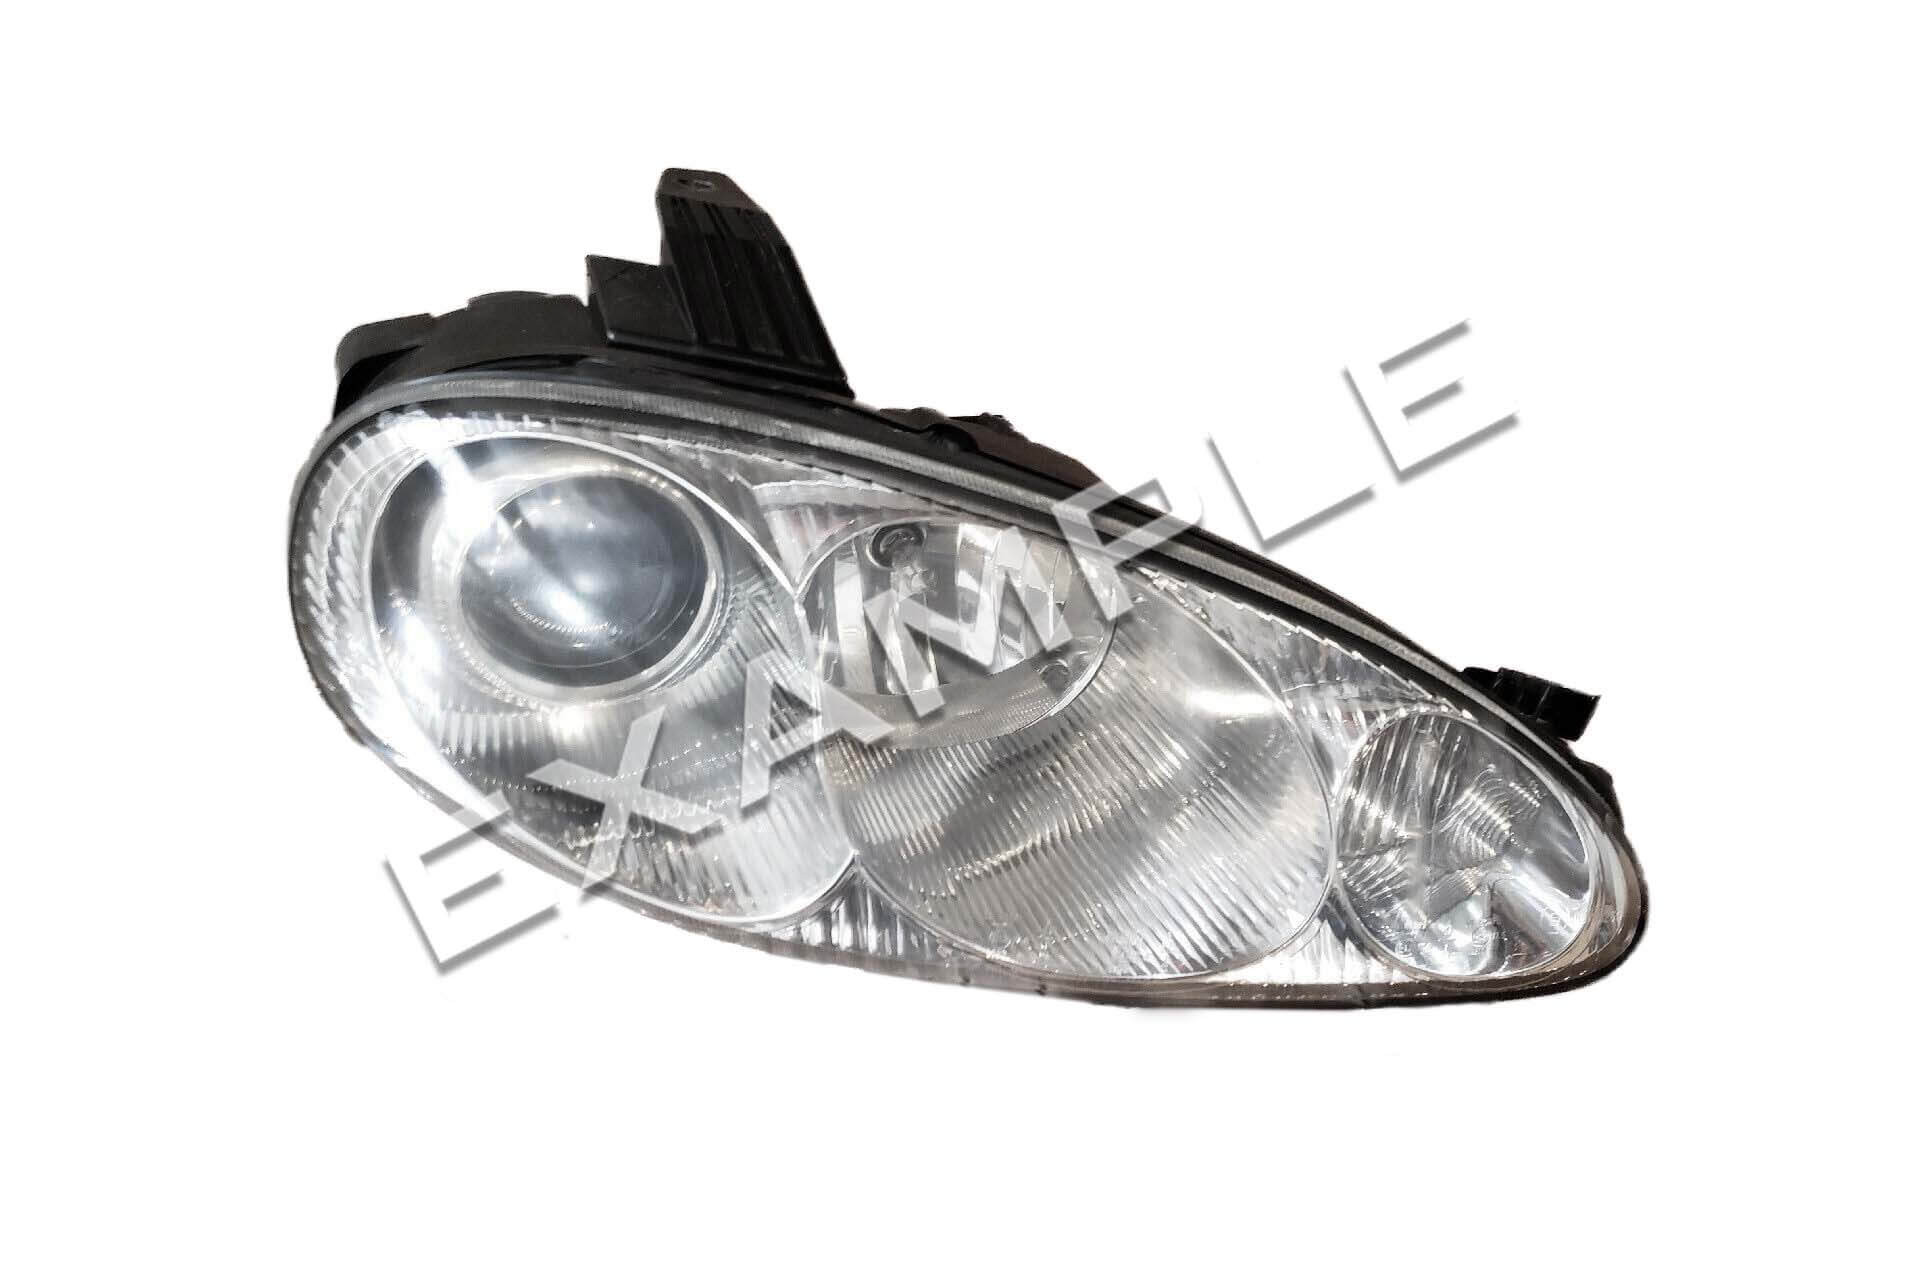 Mazda MX-5 Miata NB2 FL 01-05 Bi-xenon light upgrade retrofit kit for xenon projector headlights